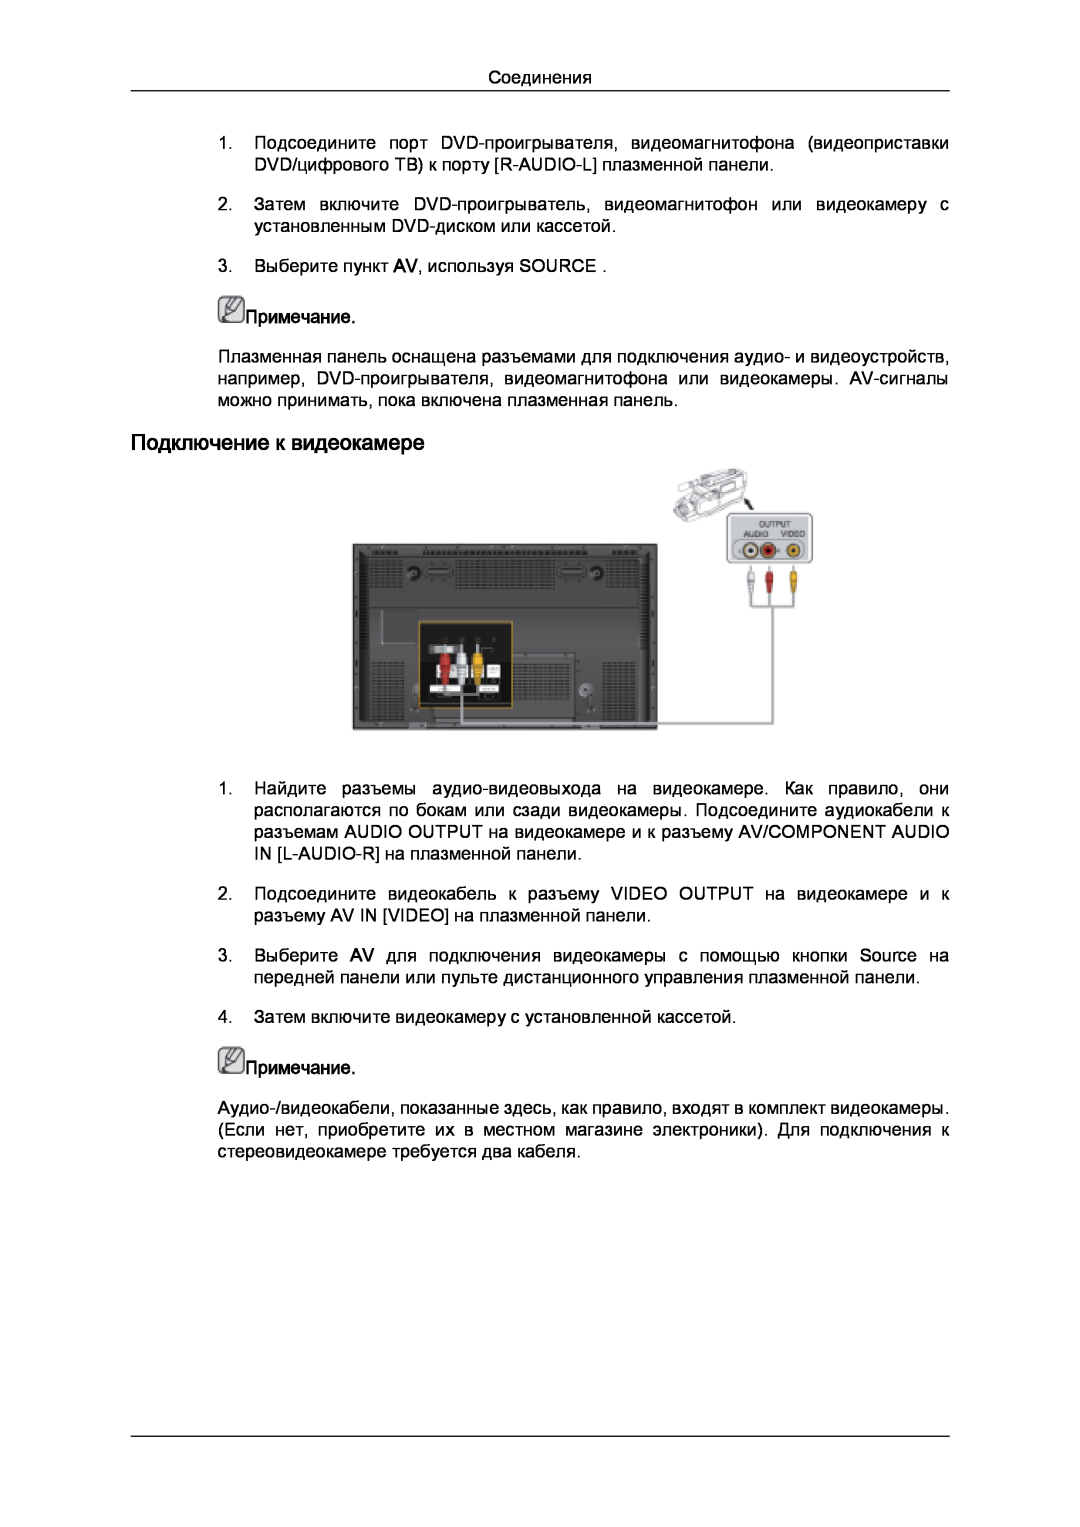 Samsung PH63KPFLBF/EN, PH50KPPLBF/EN manual Подключение к видеокамере, Примечание 